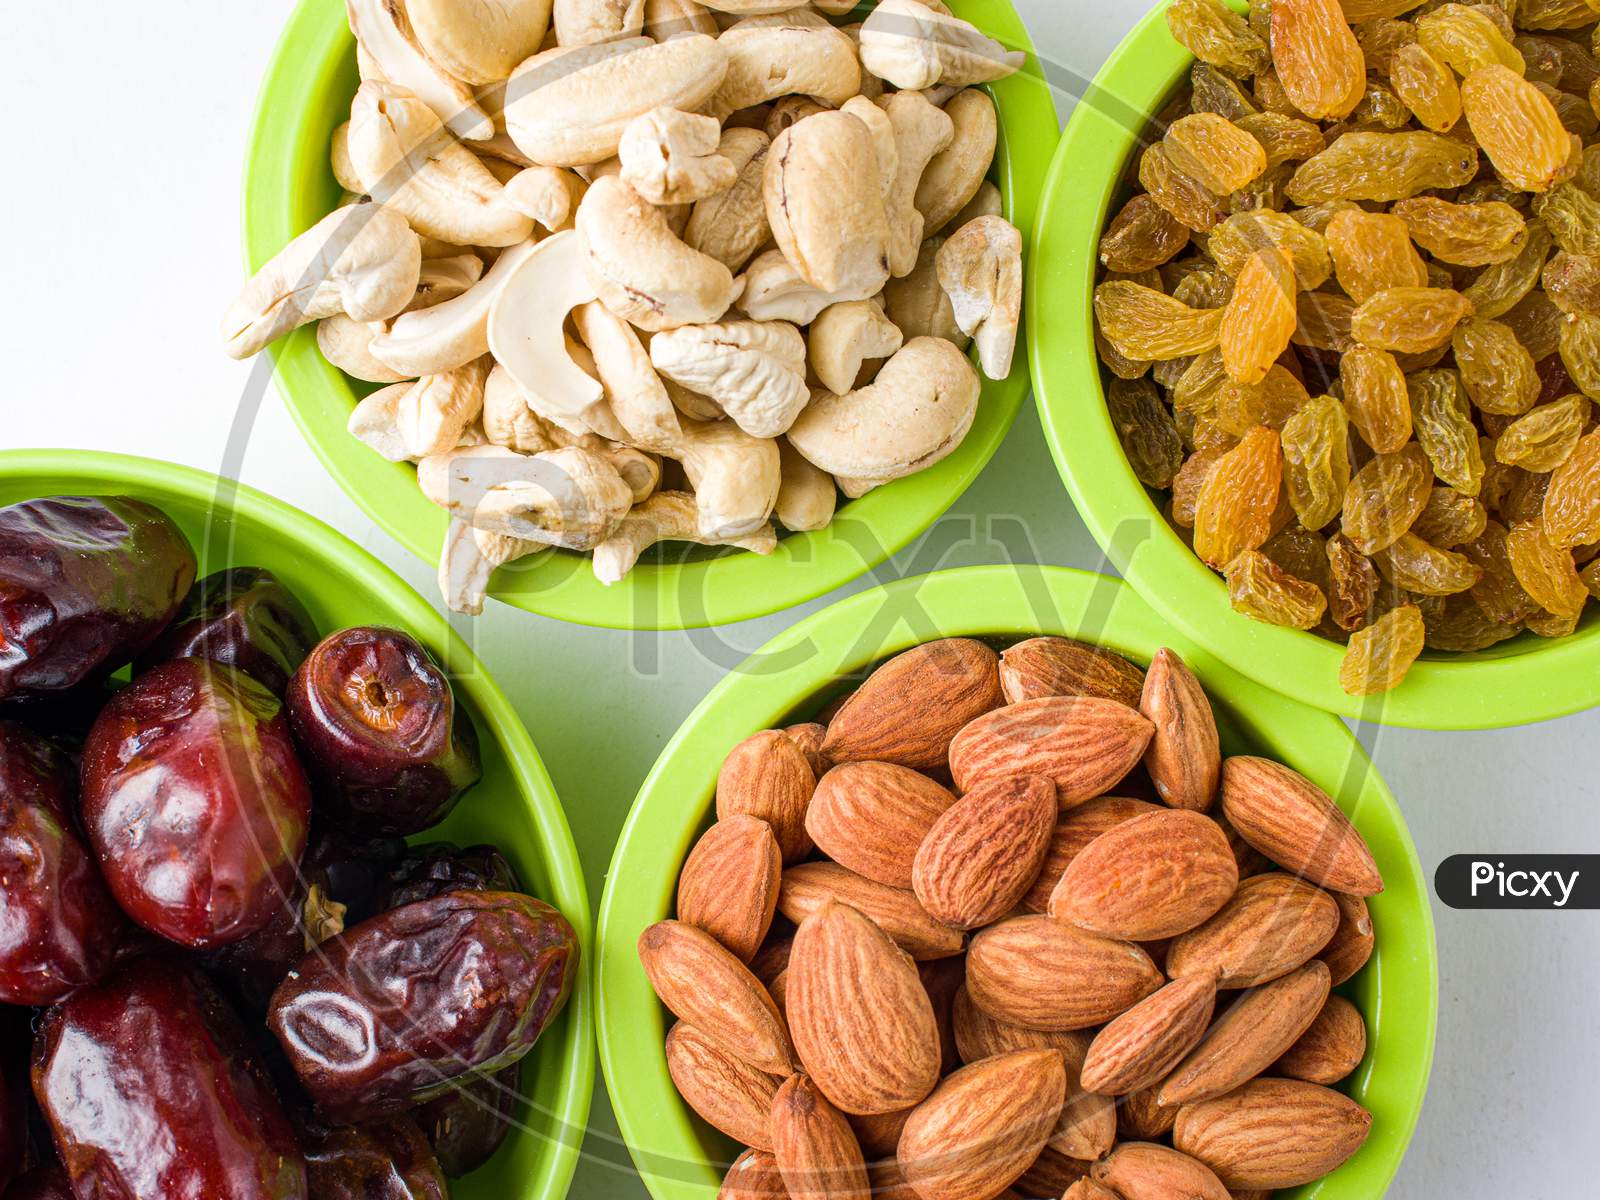 khajur, raisin/kismis, kaju badam/ cashew and almonds all at a single frame stock image white background.